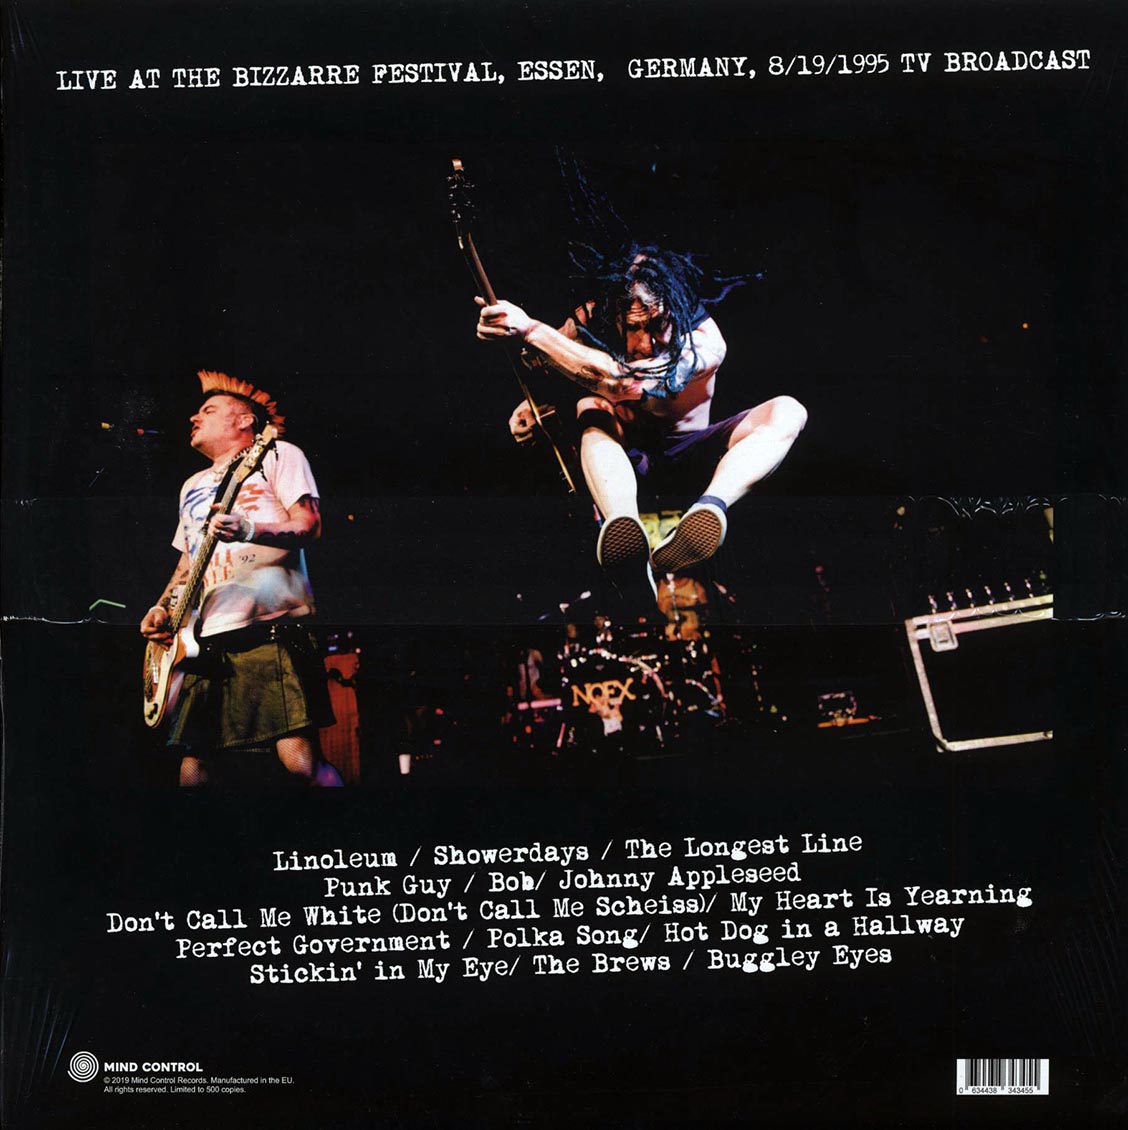 NOFX - American Drugs & German Beers: Live At The Bizzarre Festival, Essen, Germany, 8/19/1995 TV Broadcast - Vinyl LP, LP